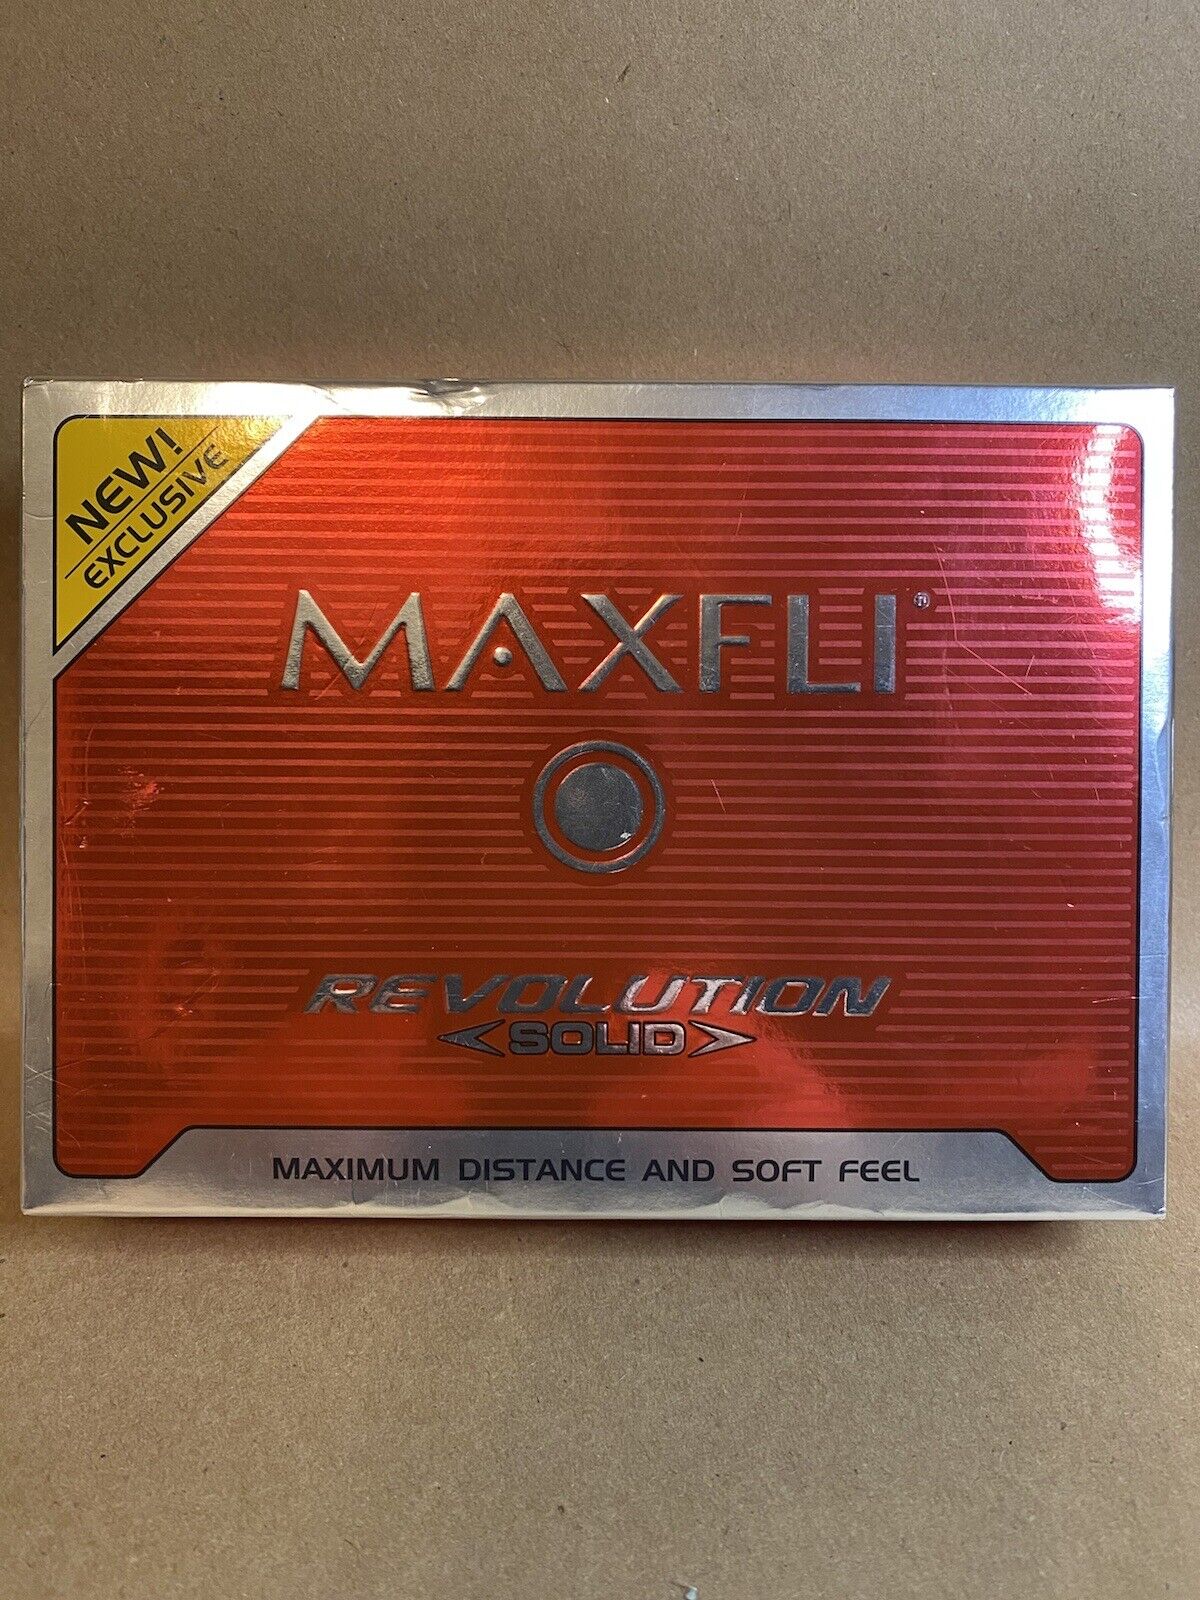 Vintage Maxfli Revolution Solid golf balls Max Distance and Soft Feel New 12